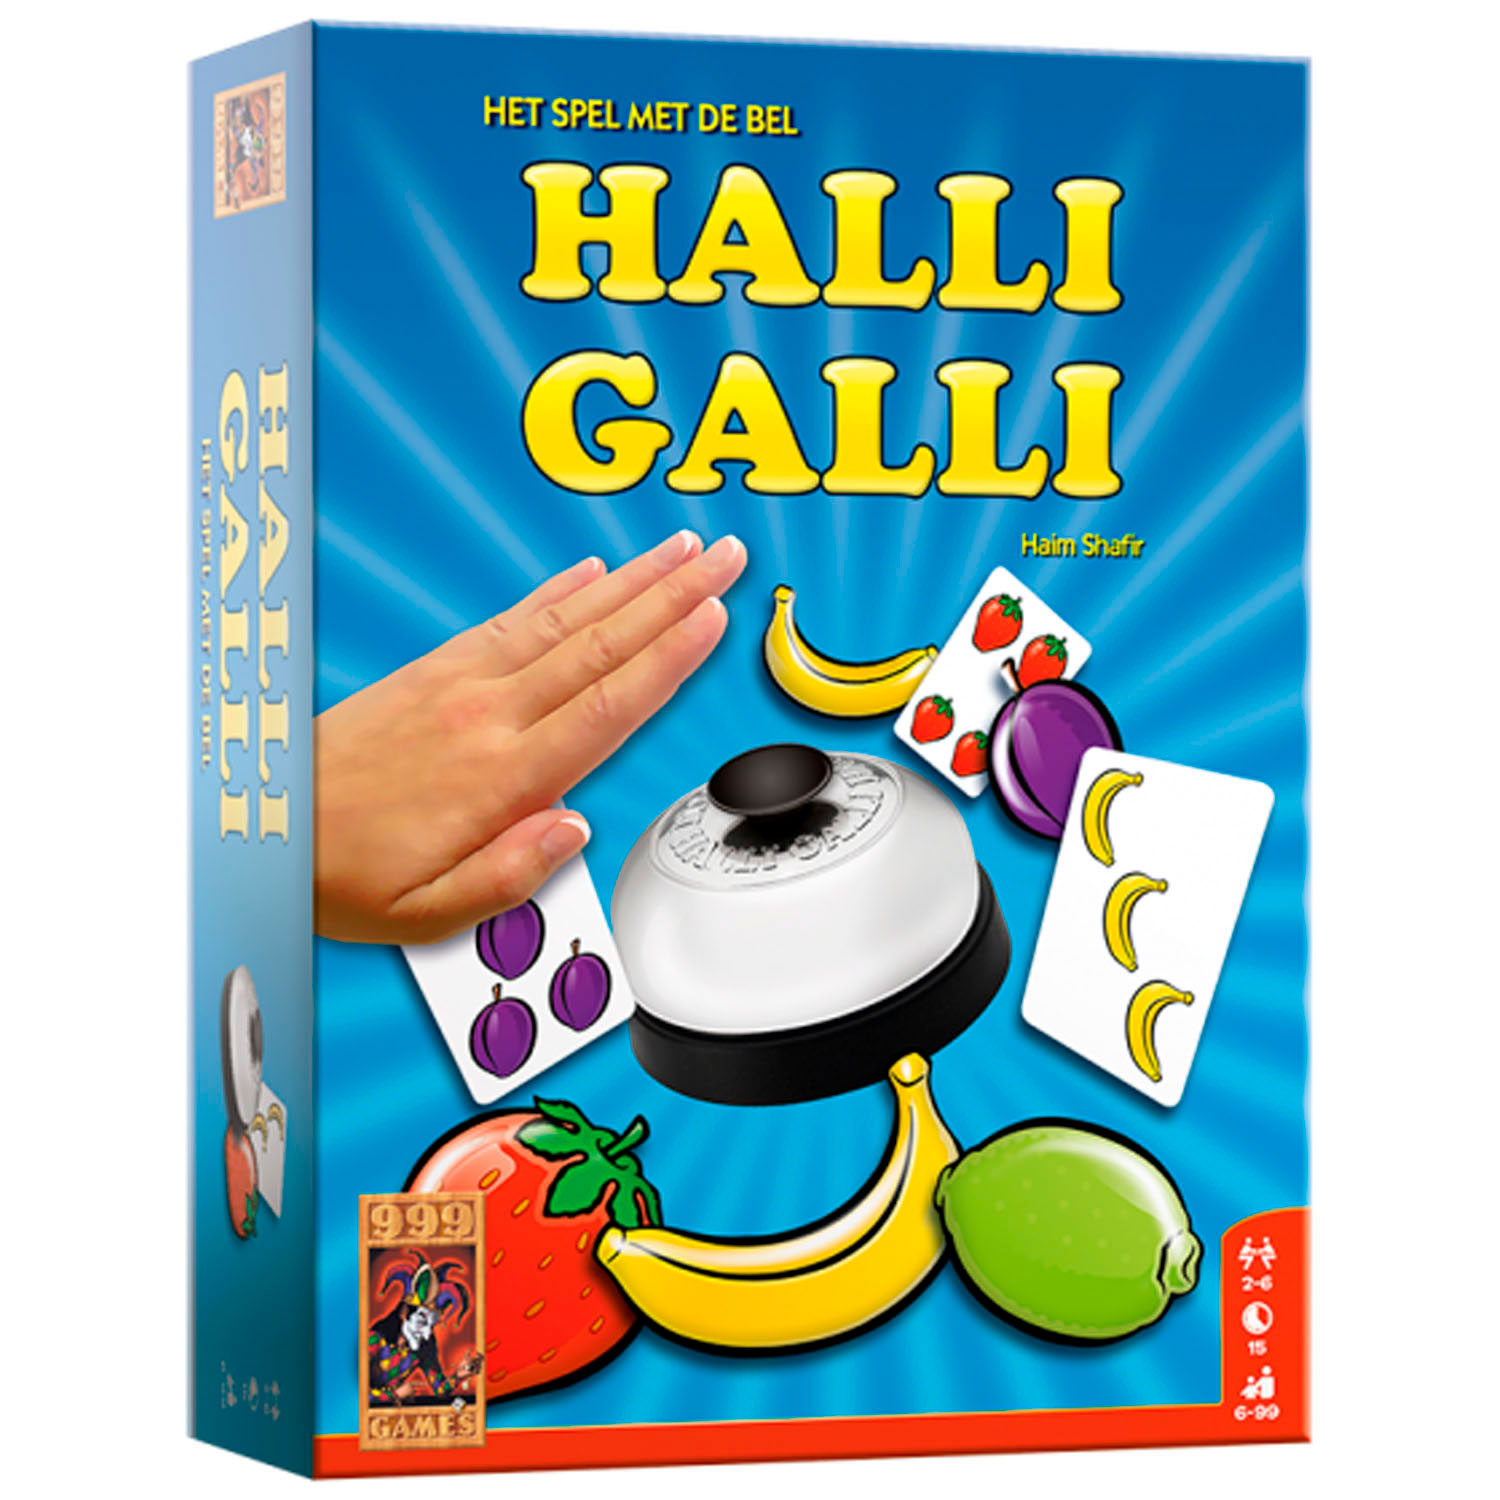 Halli Galli Twist, Board Game